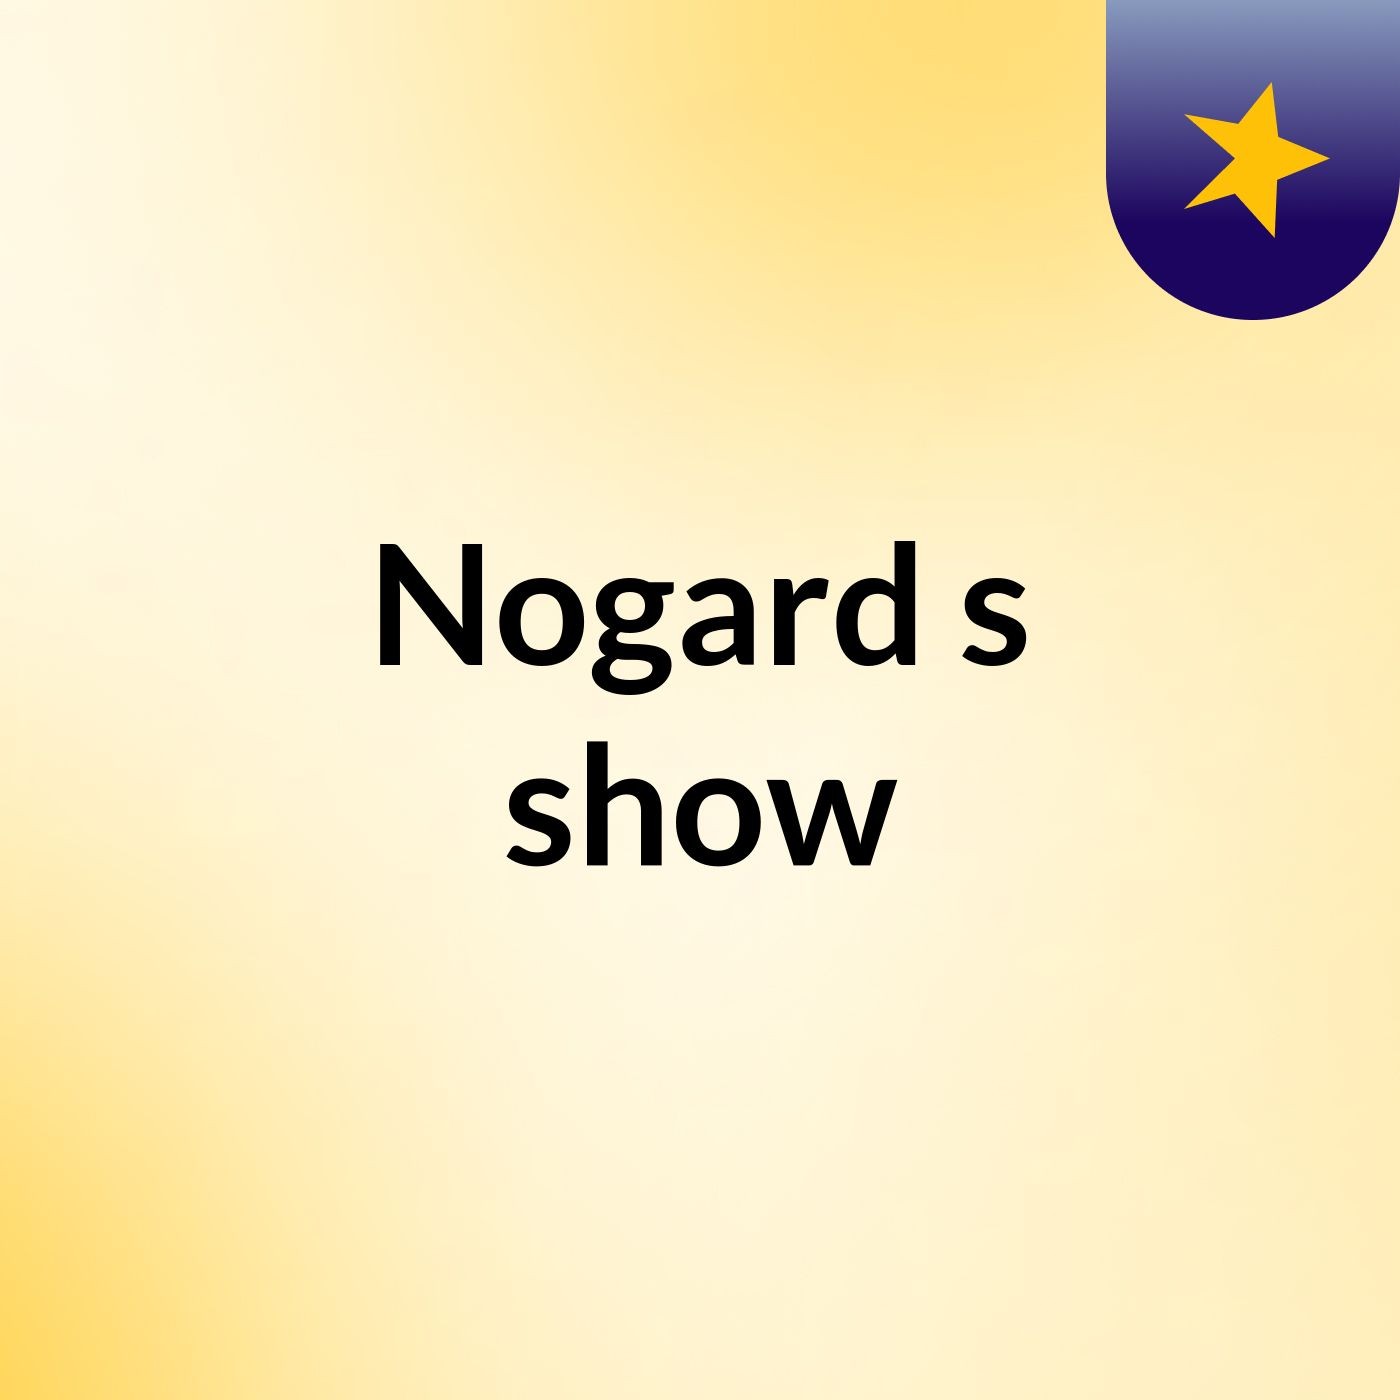 Nogard's show